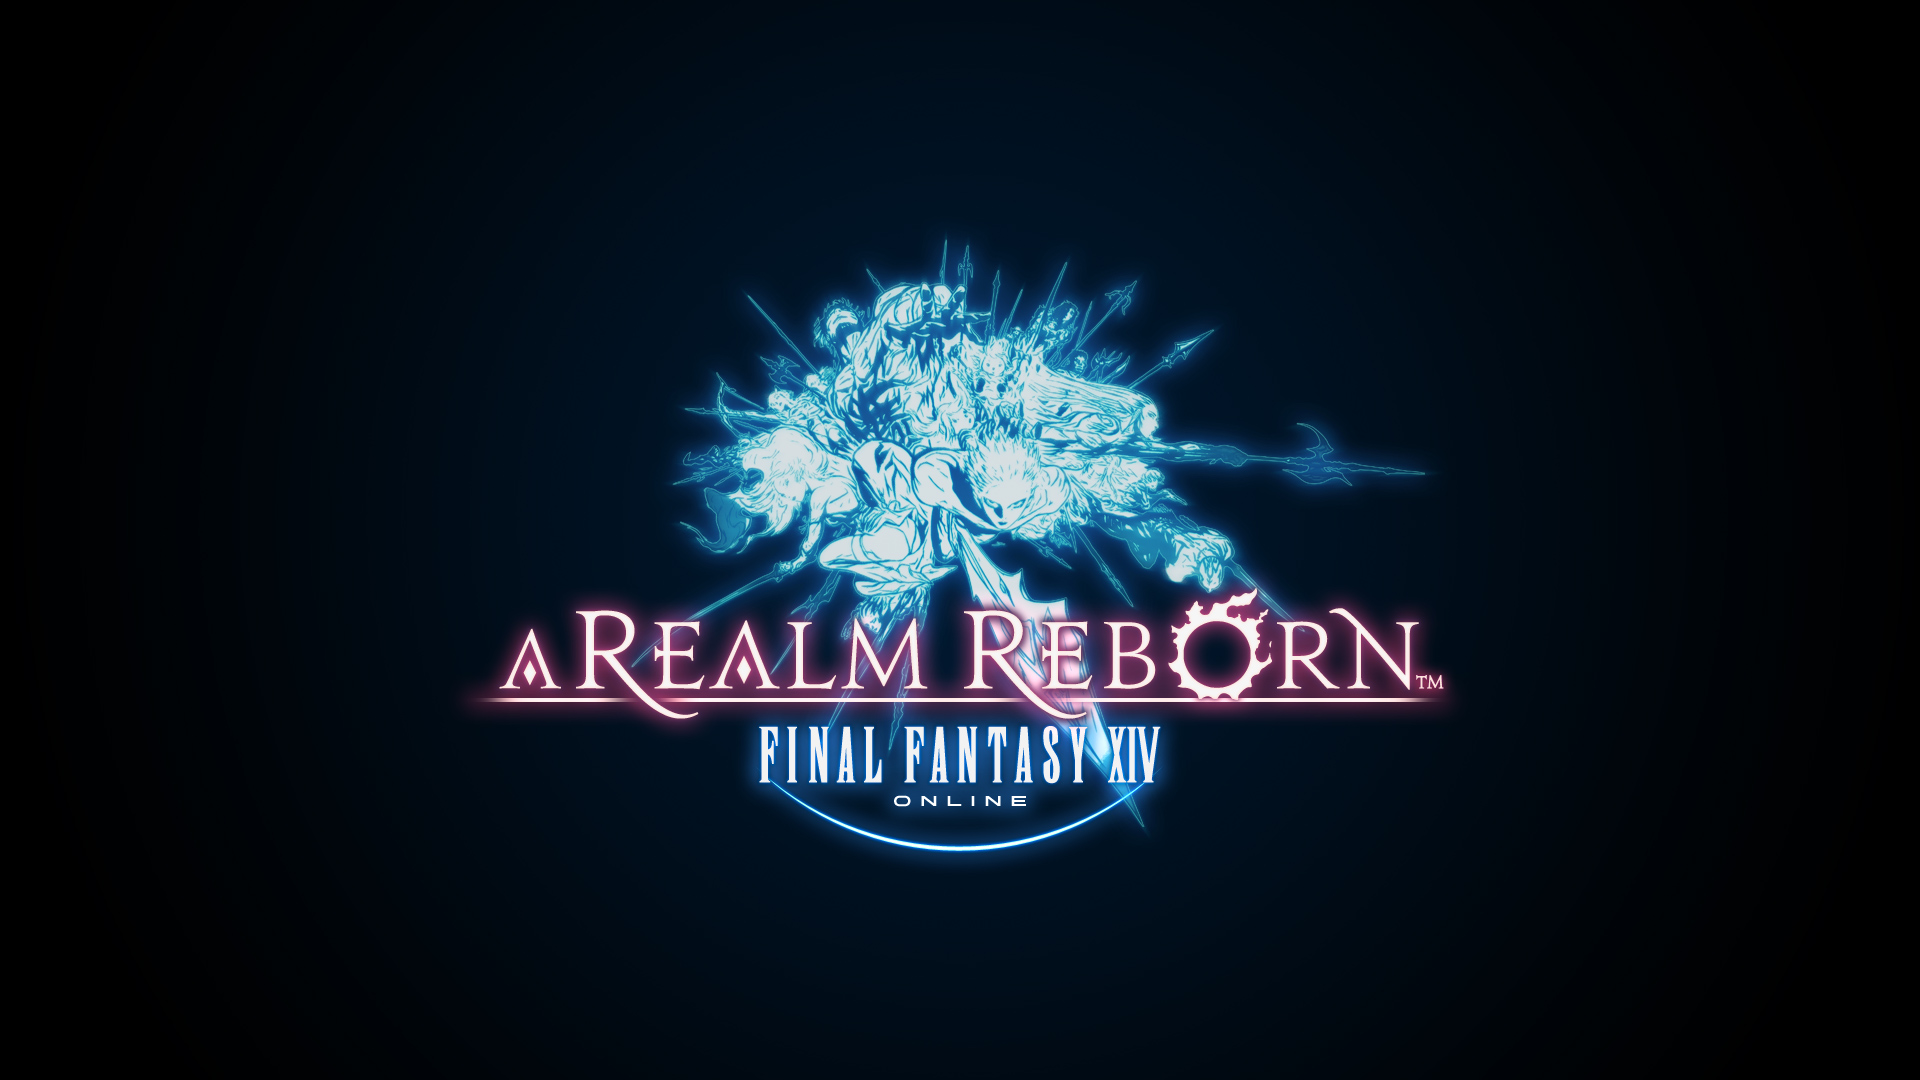 Final Fantasy XIV A Realm Reborn logo